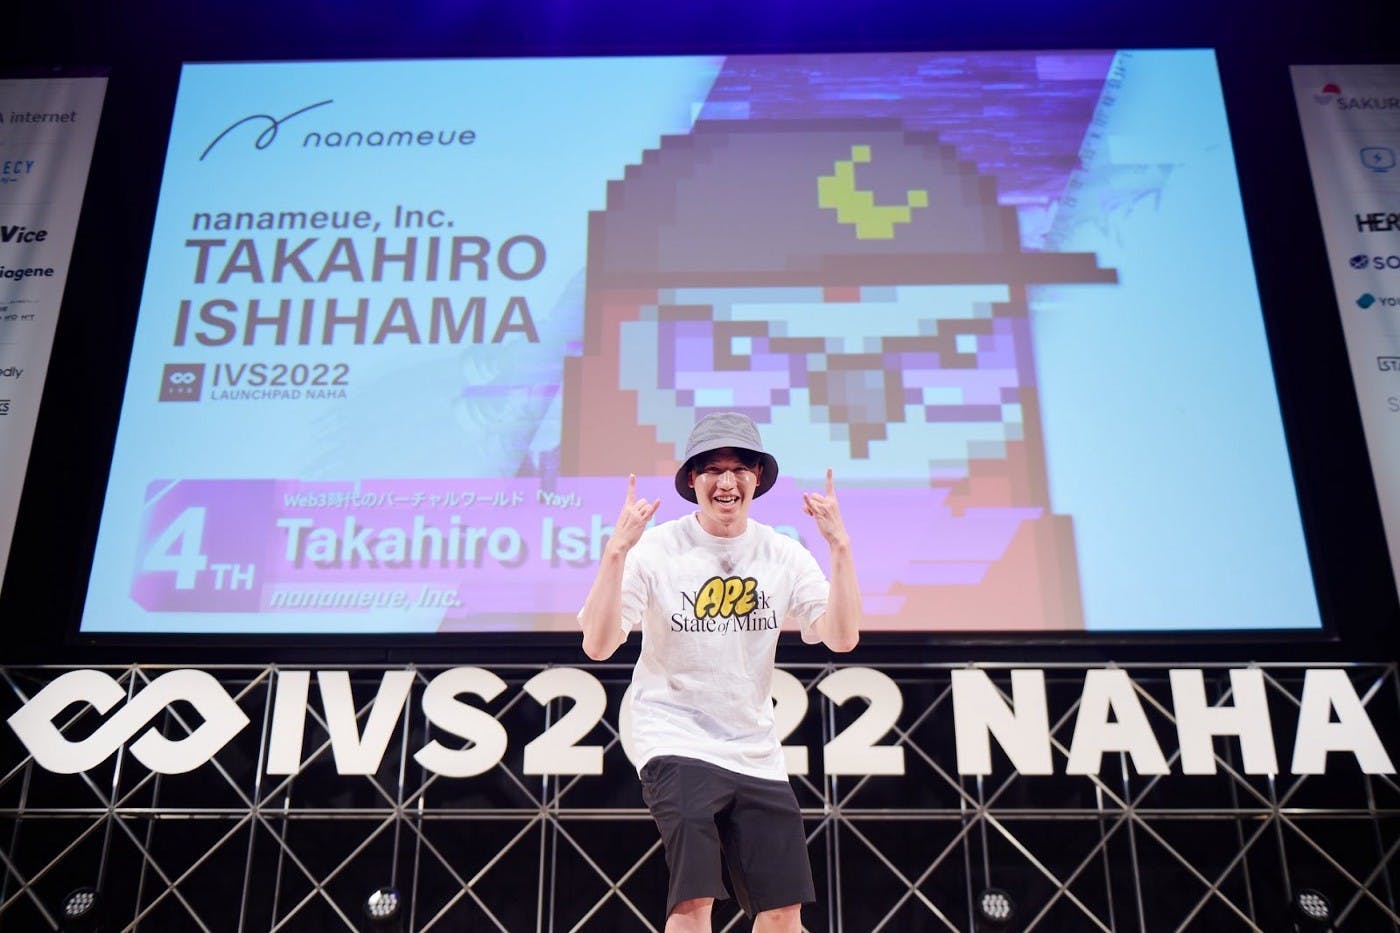 nanameue CEO Takahito Ishihama